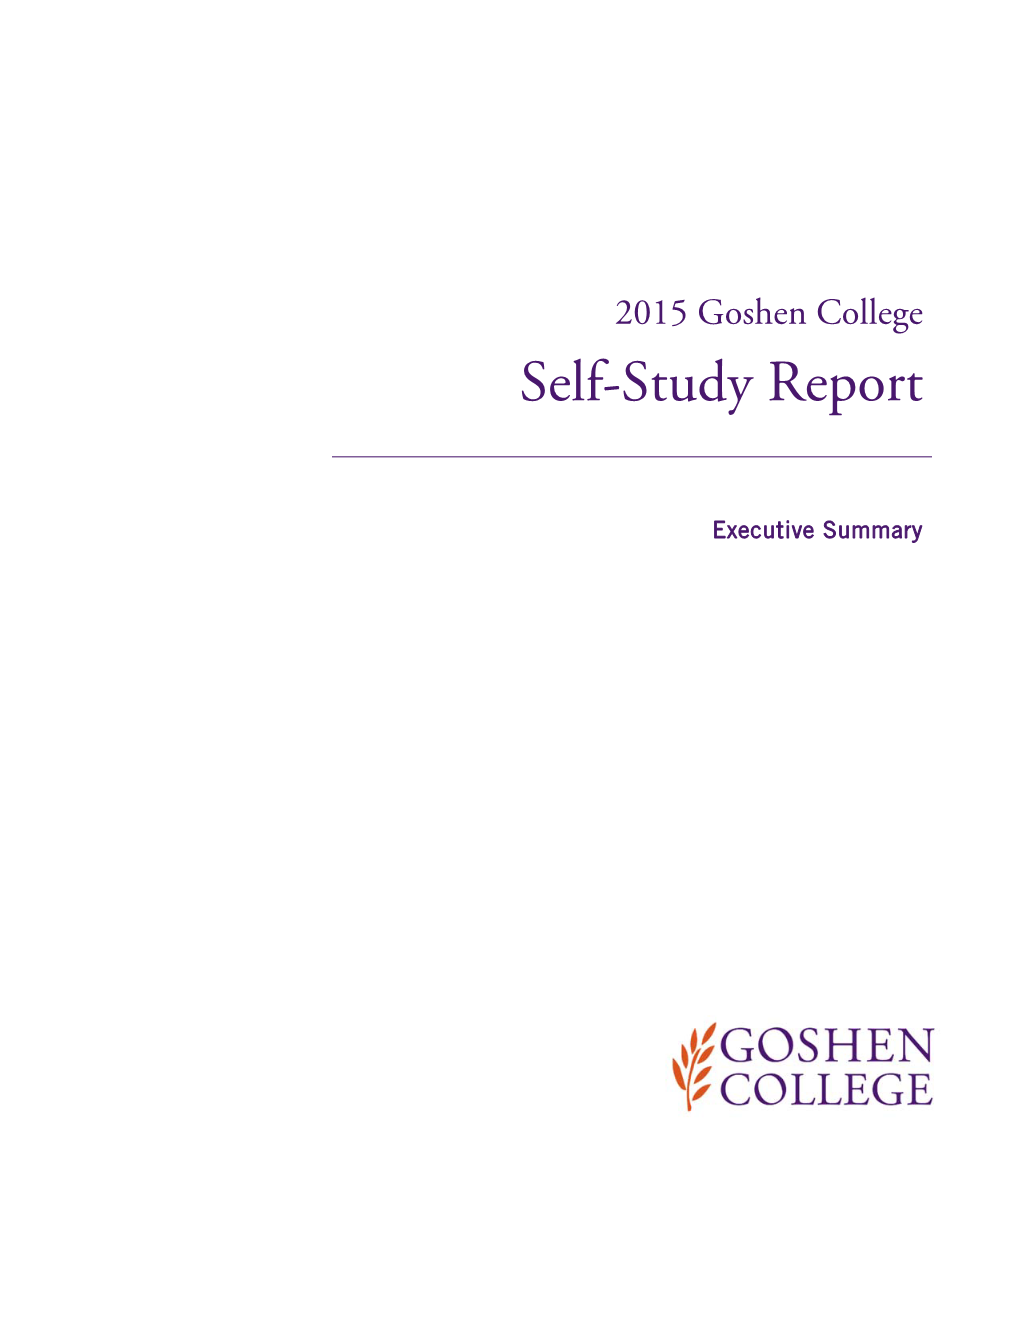 Self-Study Report